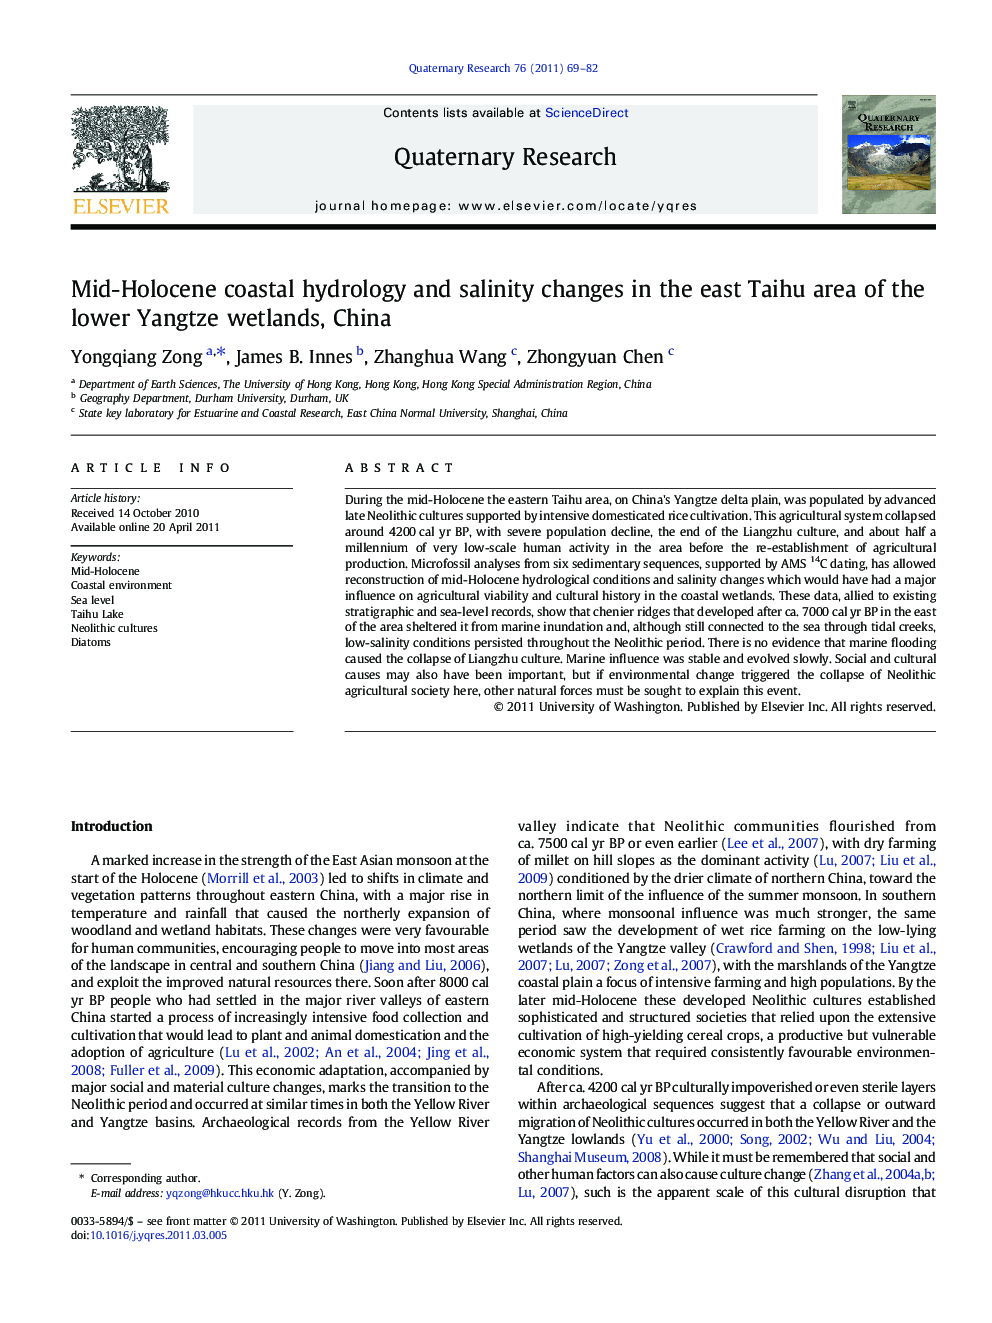 Mid-Holocene coastal hydrology and salinity changes in the east Taihu area of the lower Yangtze wetlands, China